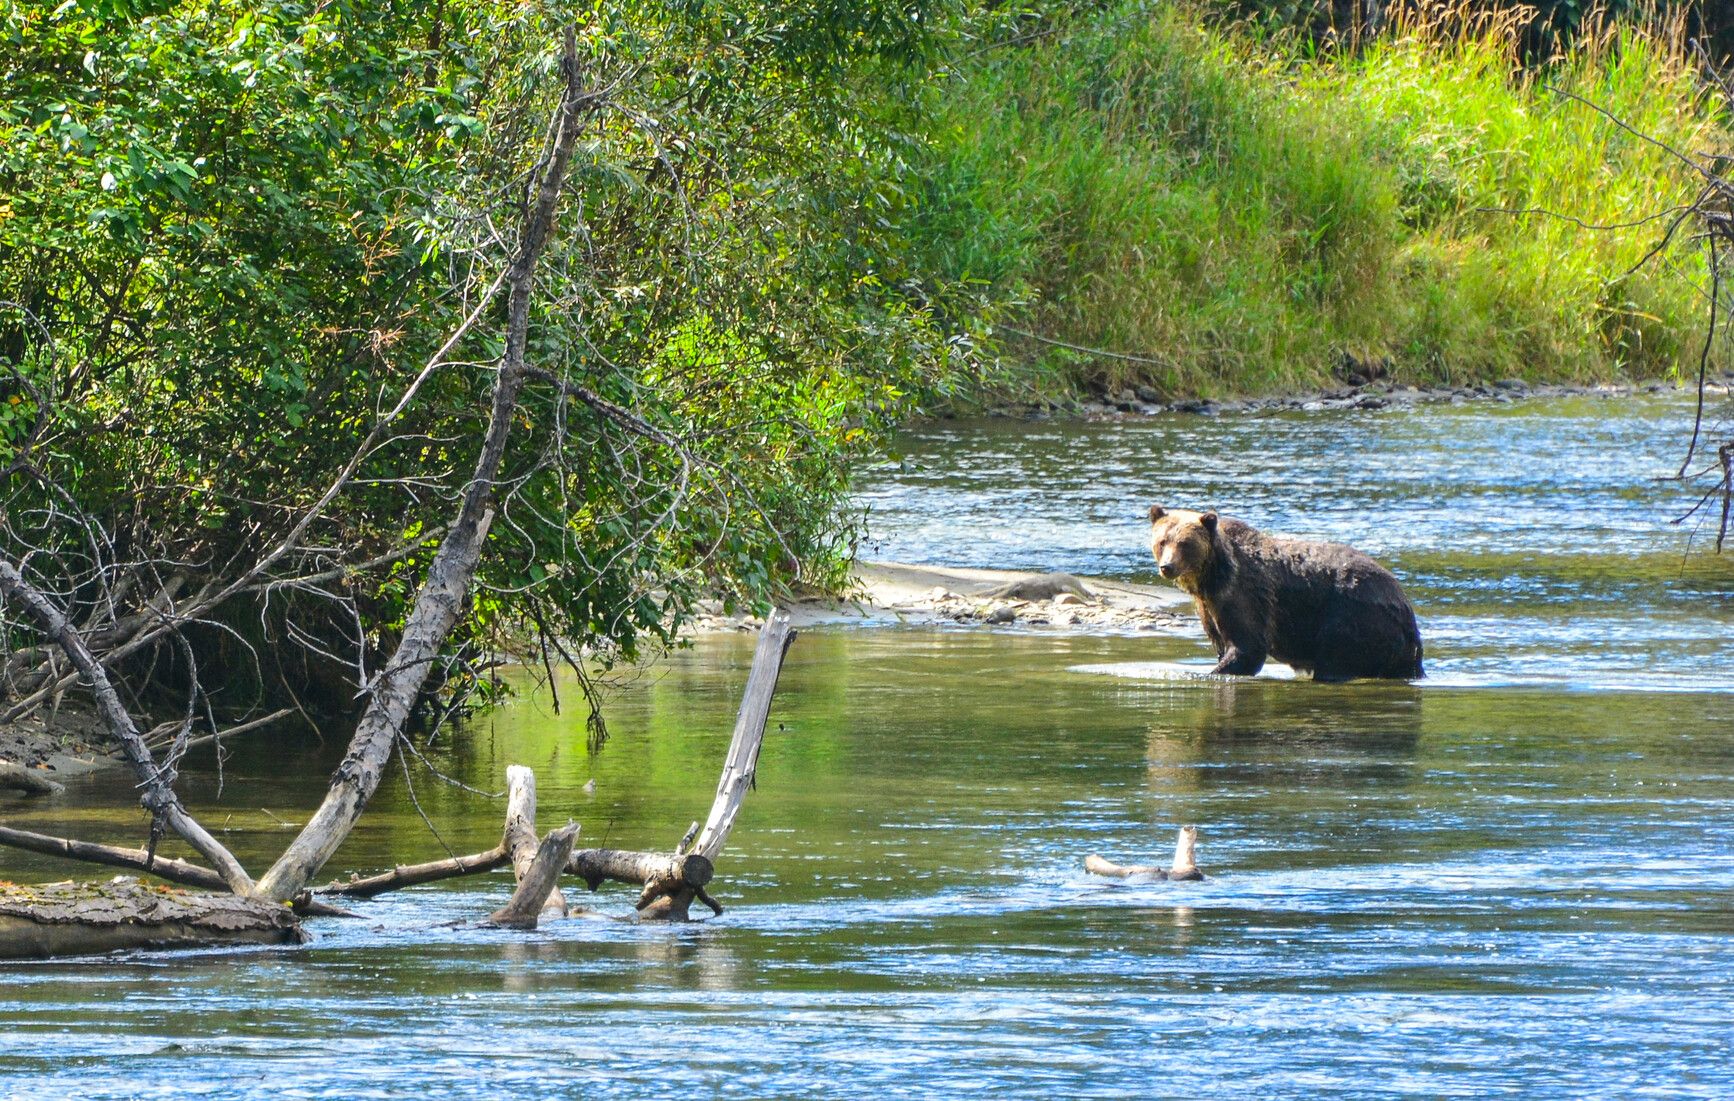 A grizzly bear (Ursus arctos horribilis) in the Atnarko River, Tweeesmuir Park.